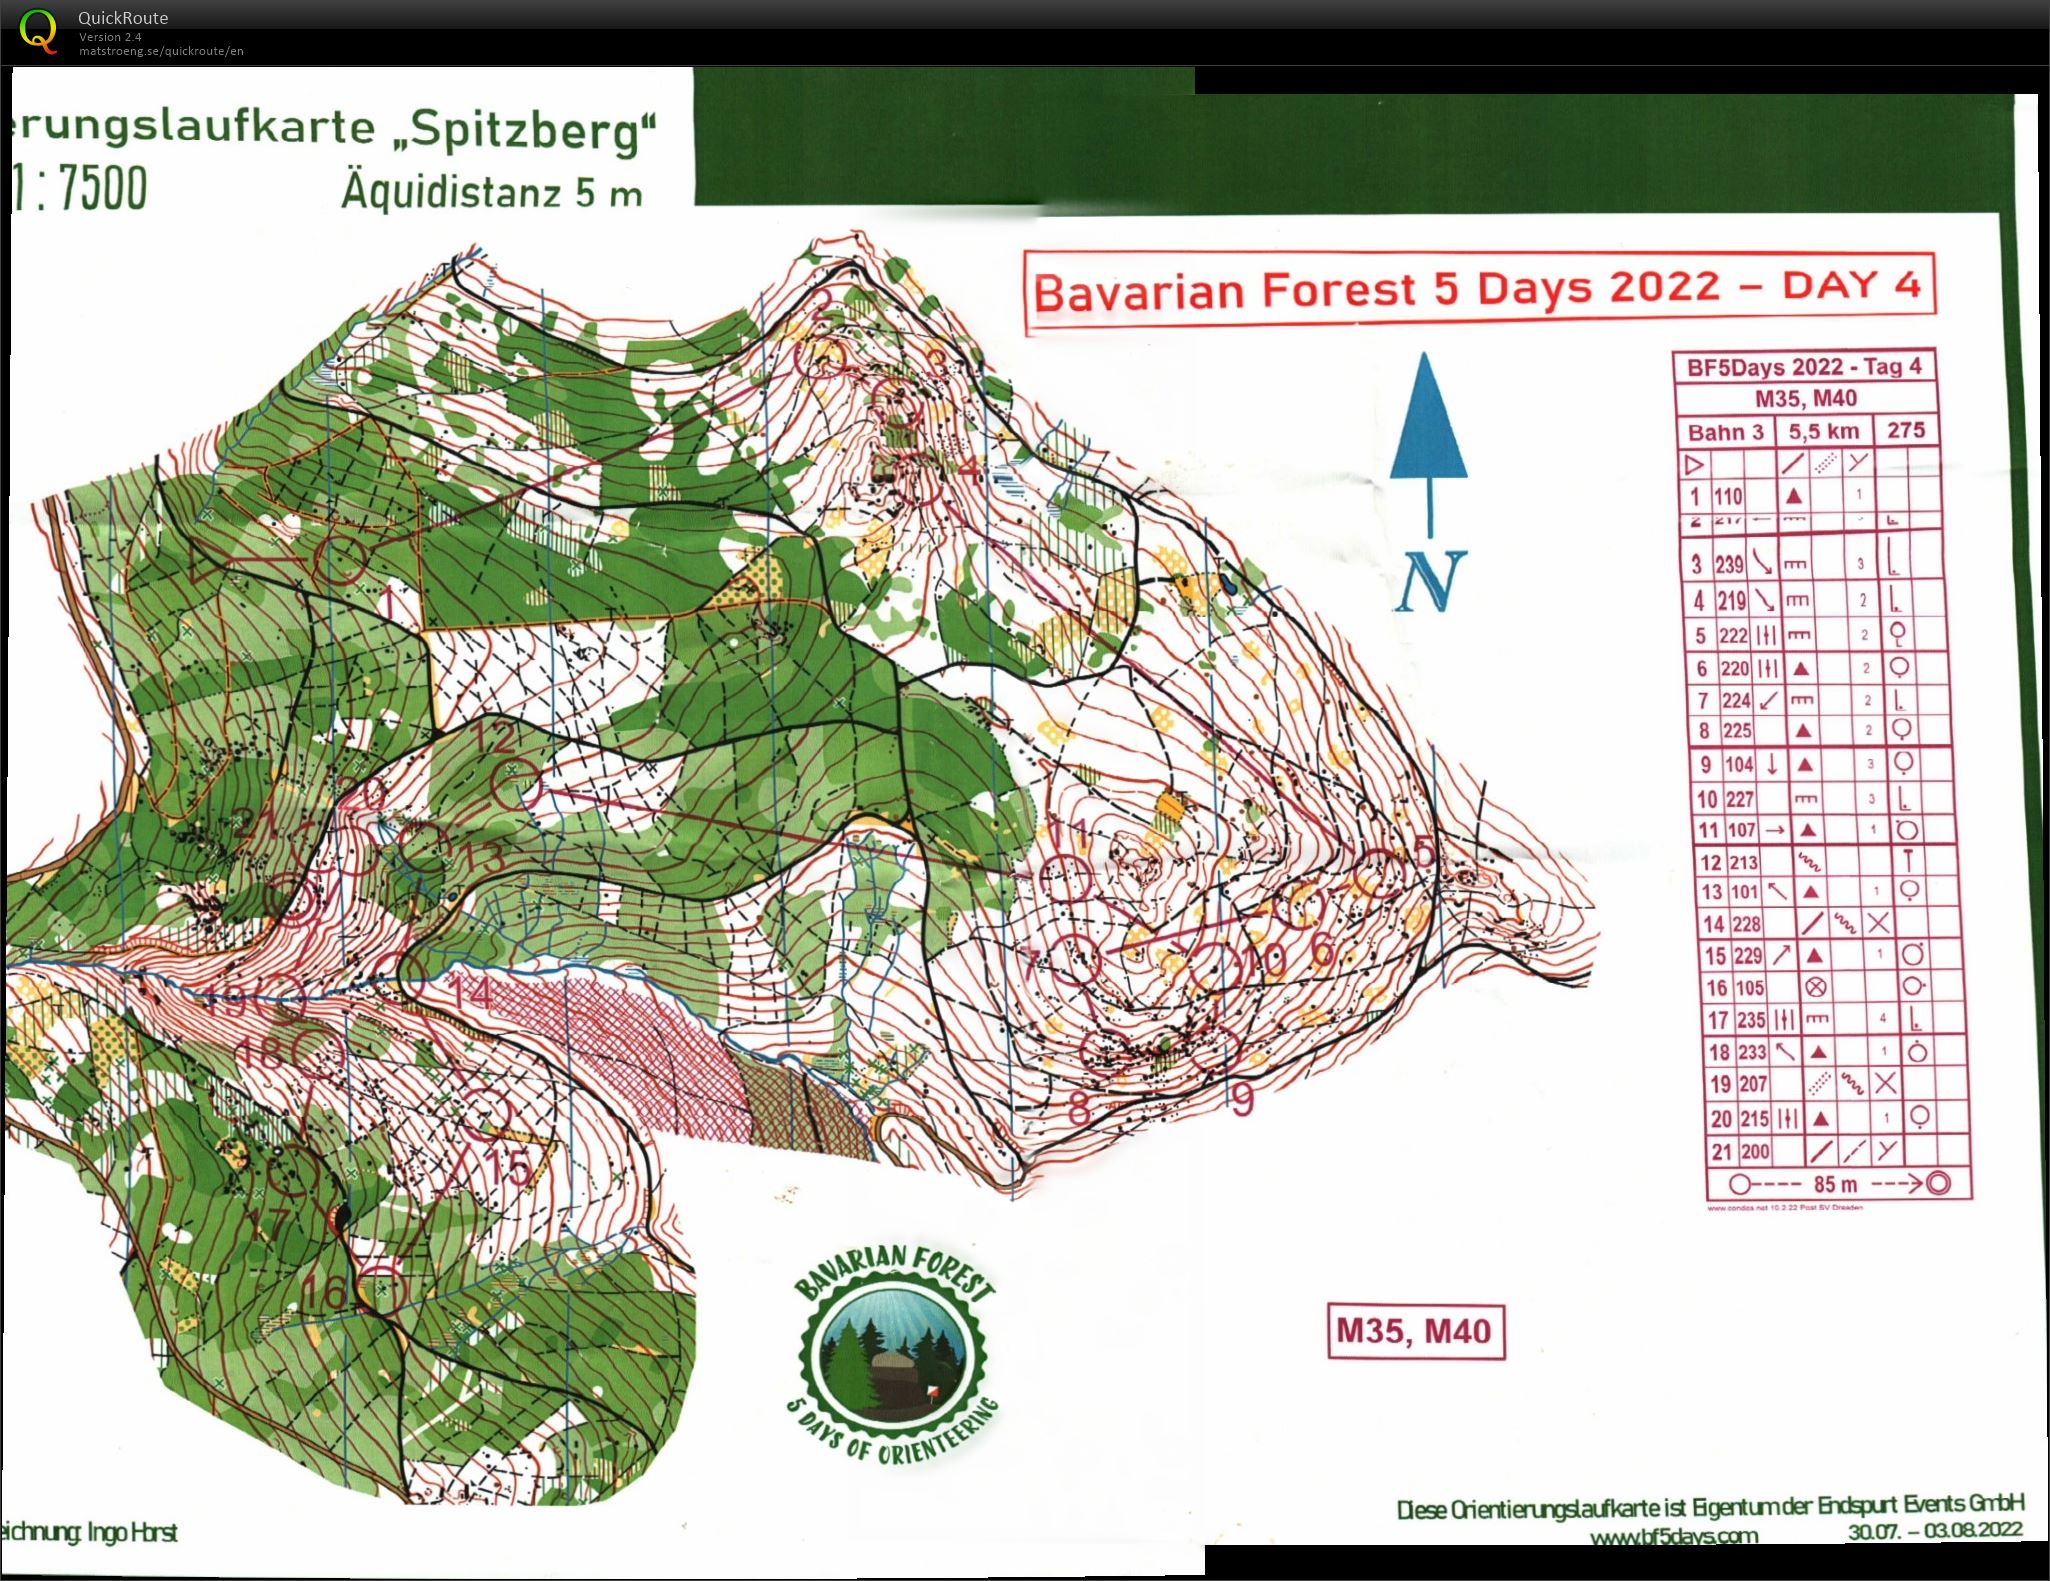 Bavarian Forest 5 Days - Day 4 (02.08.2022)